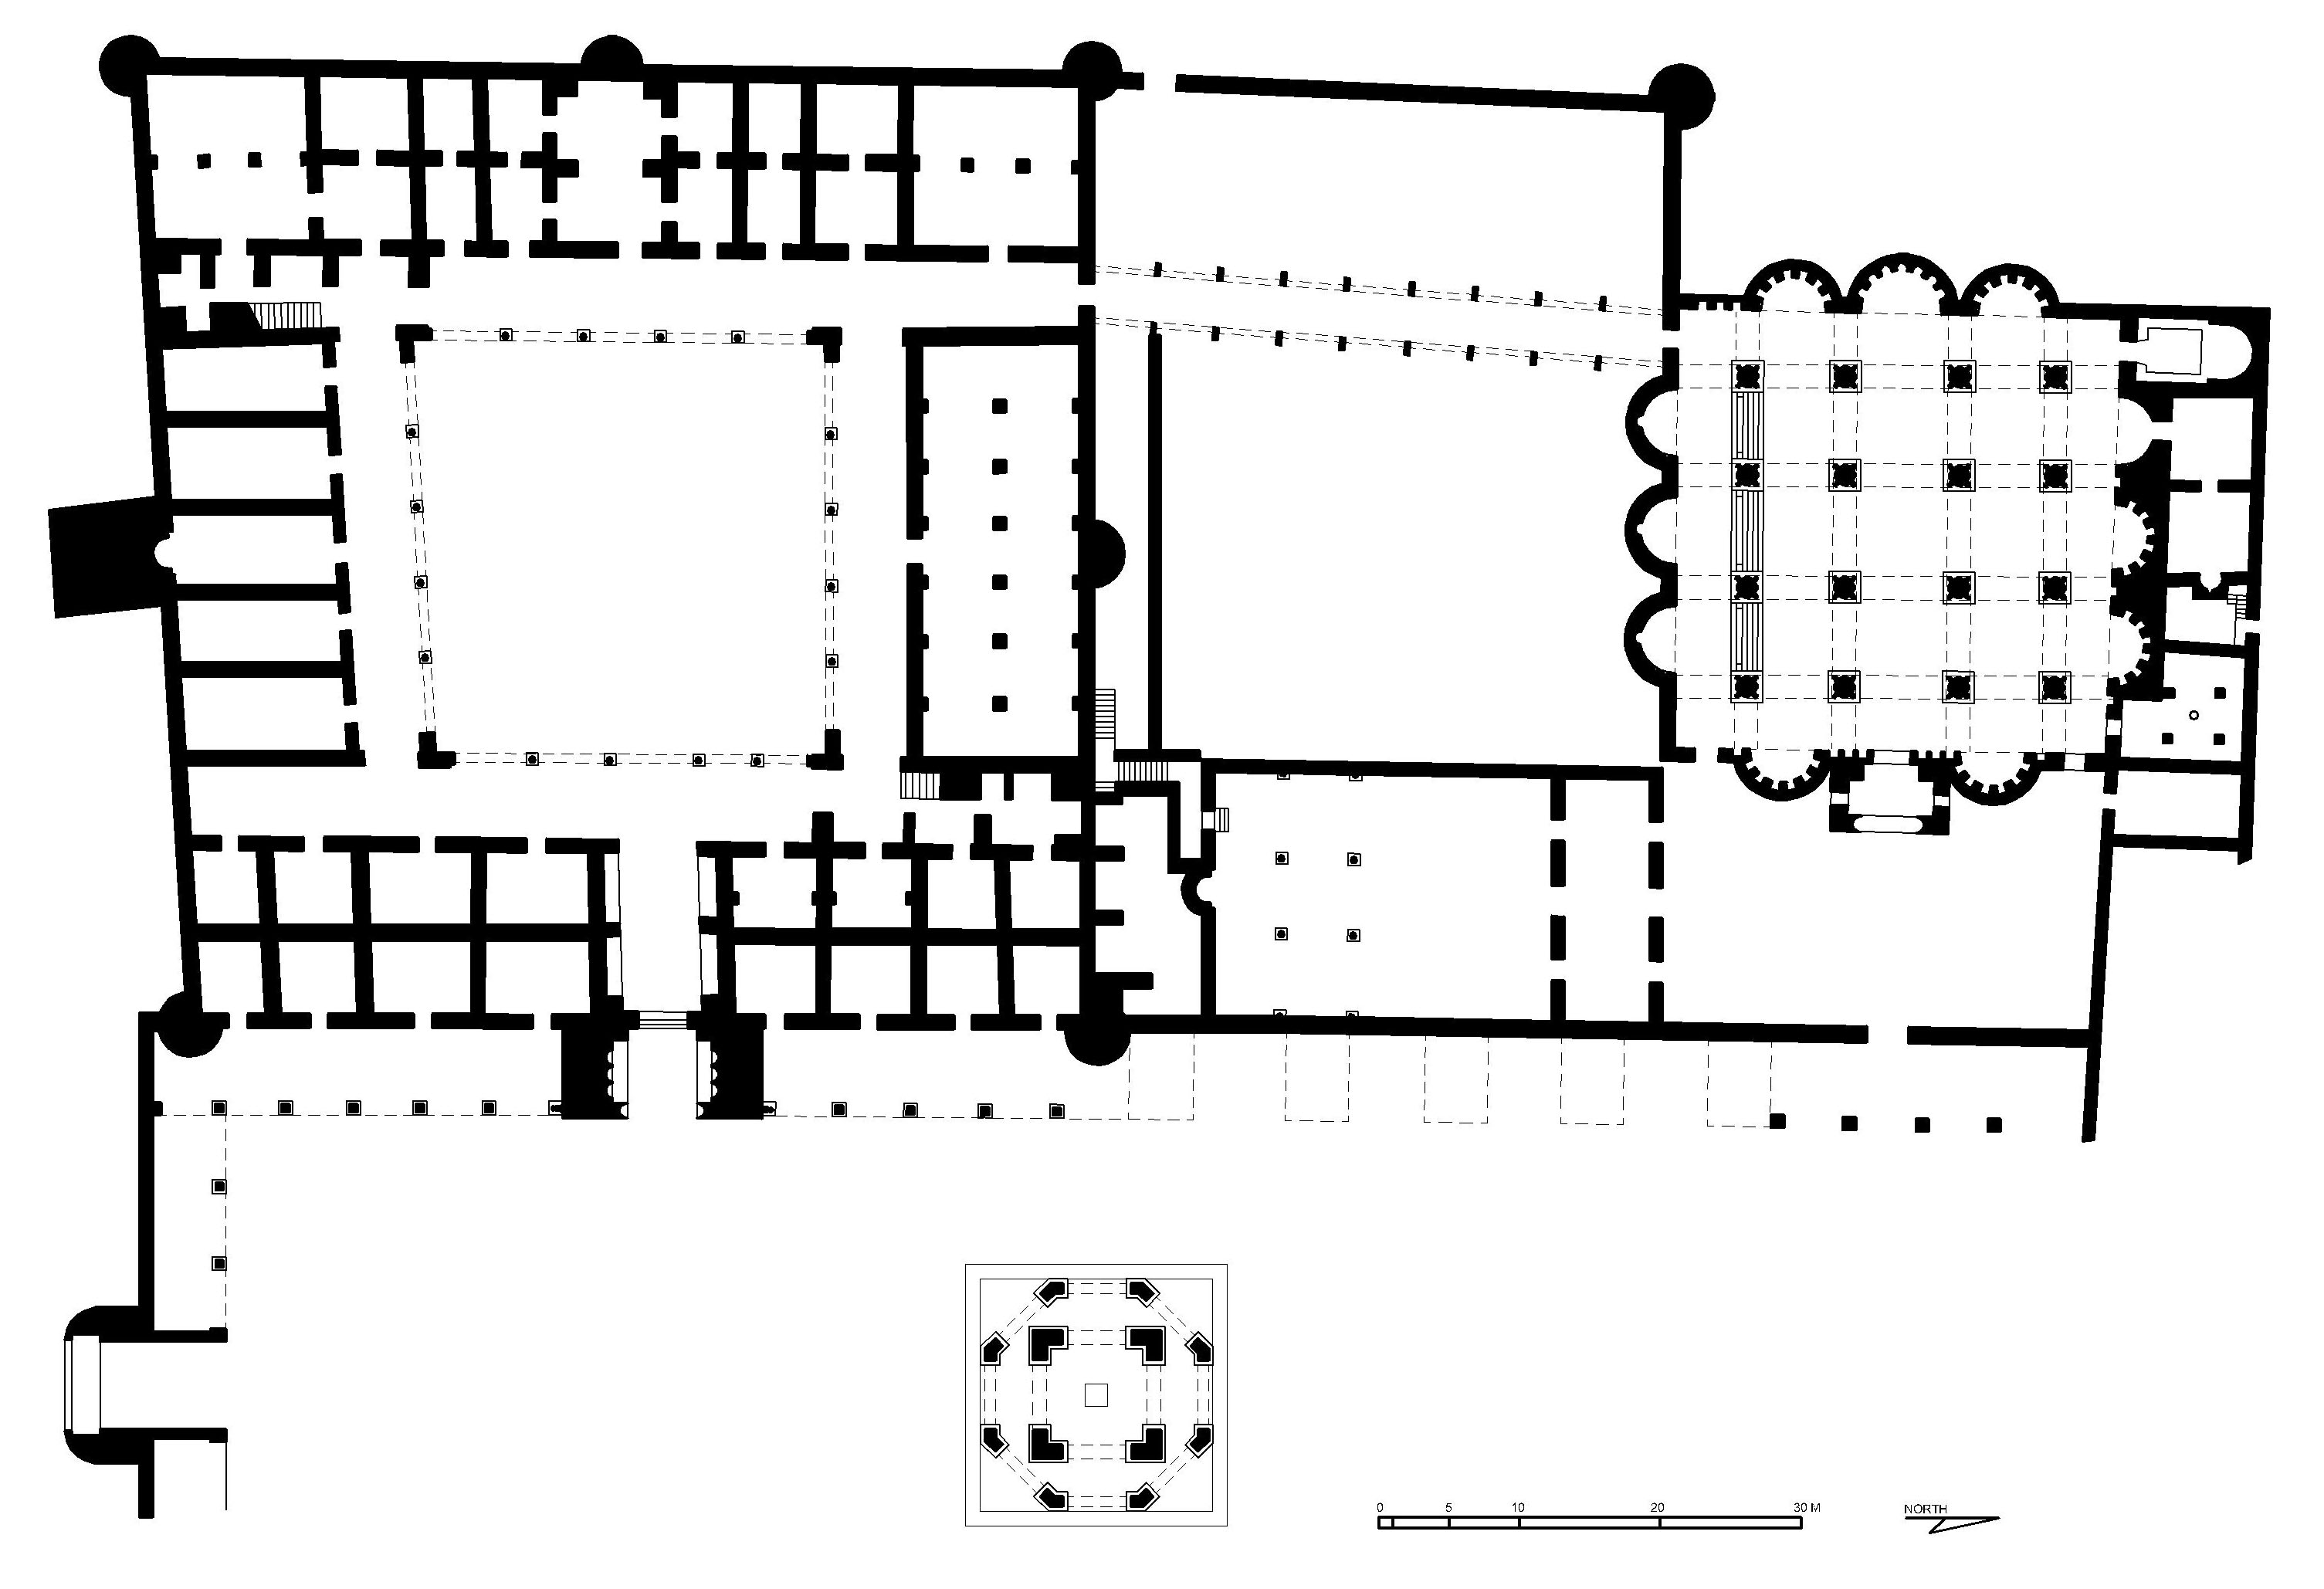 Floor plan of palace